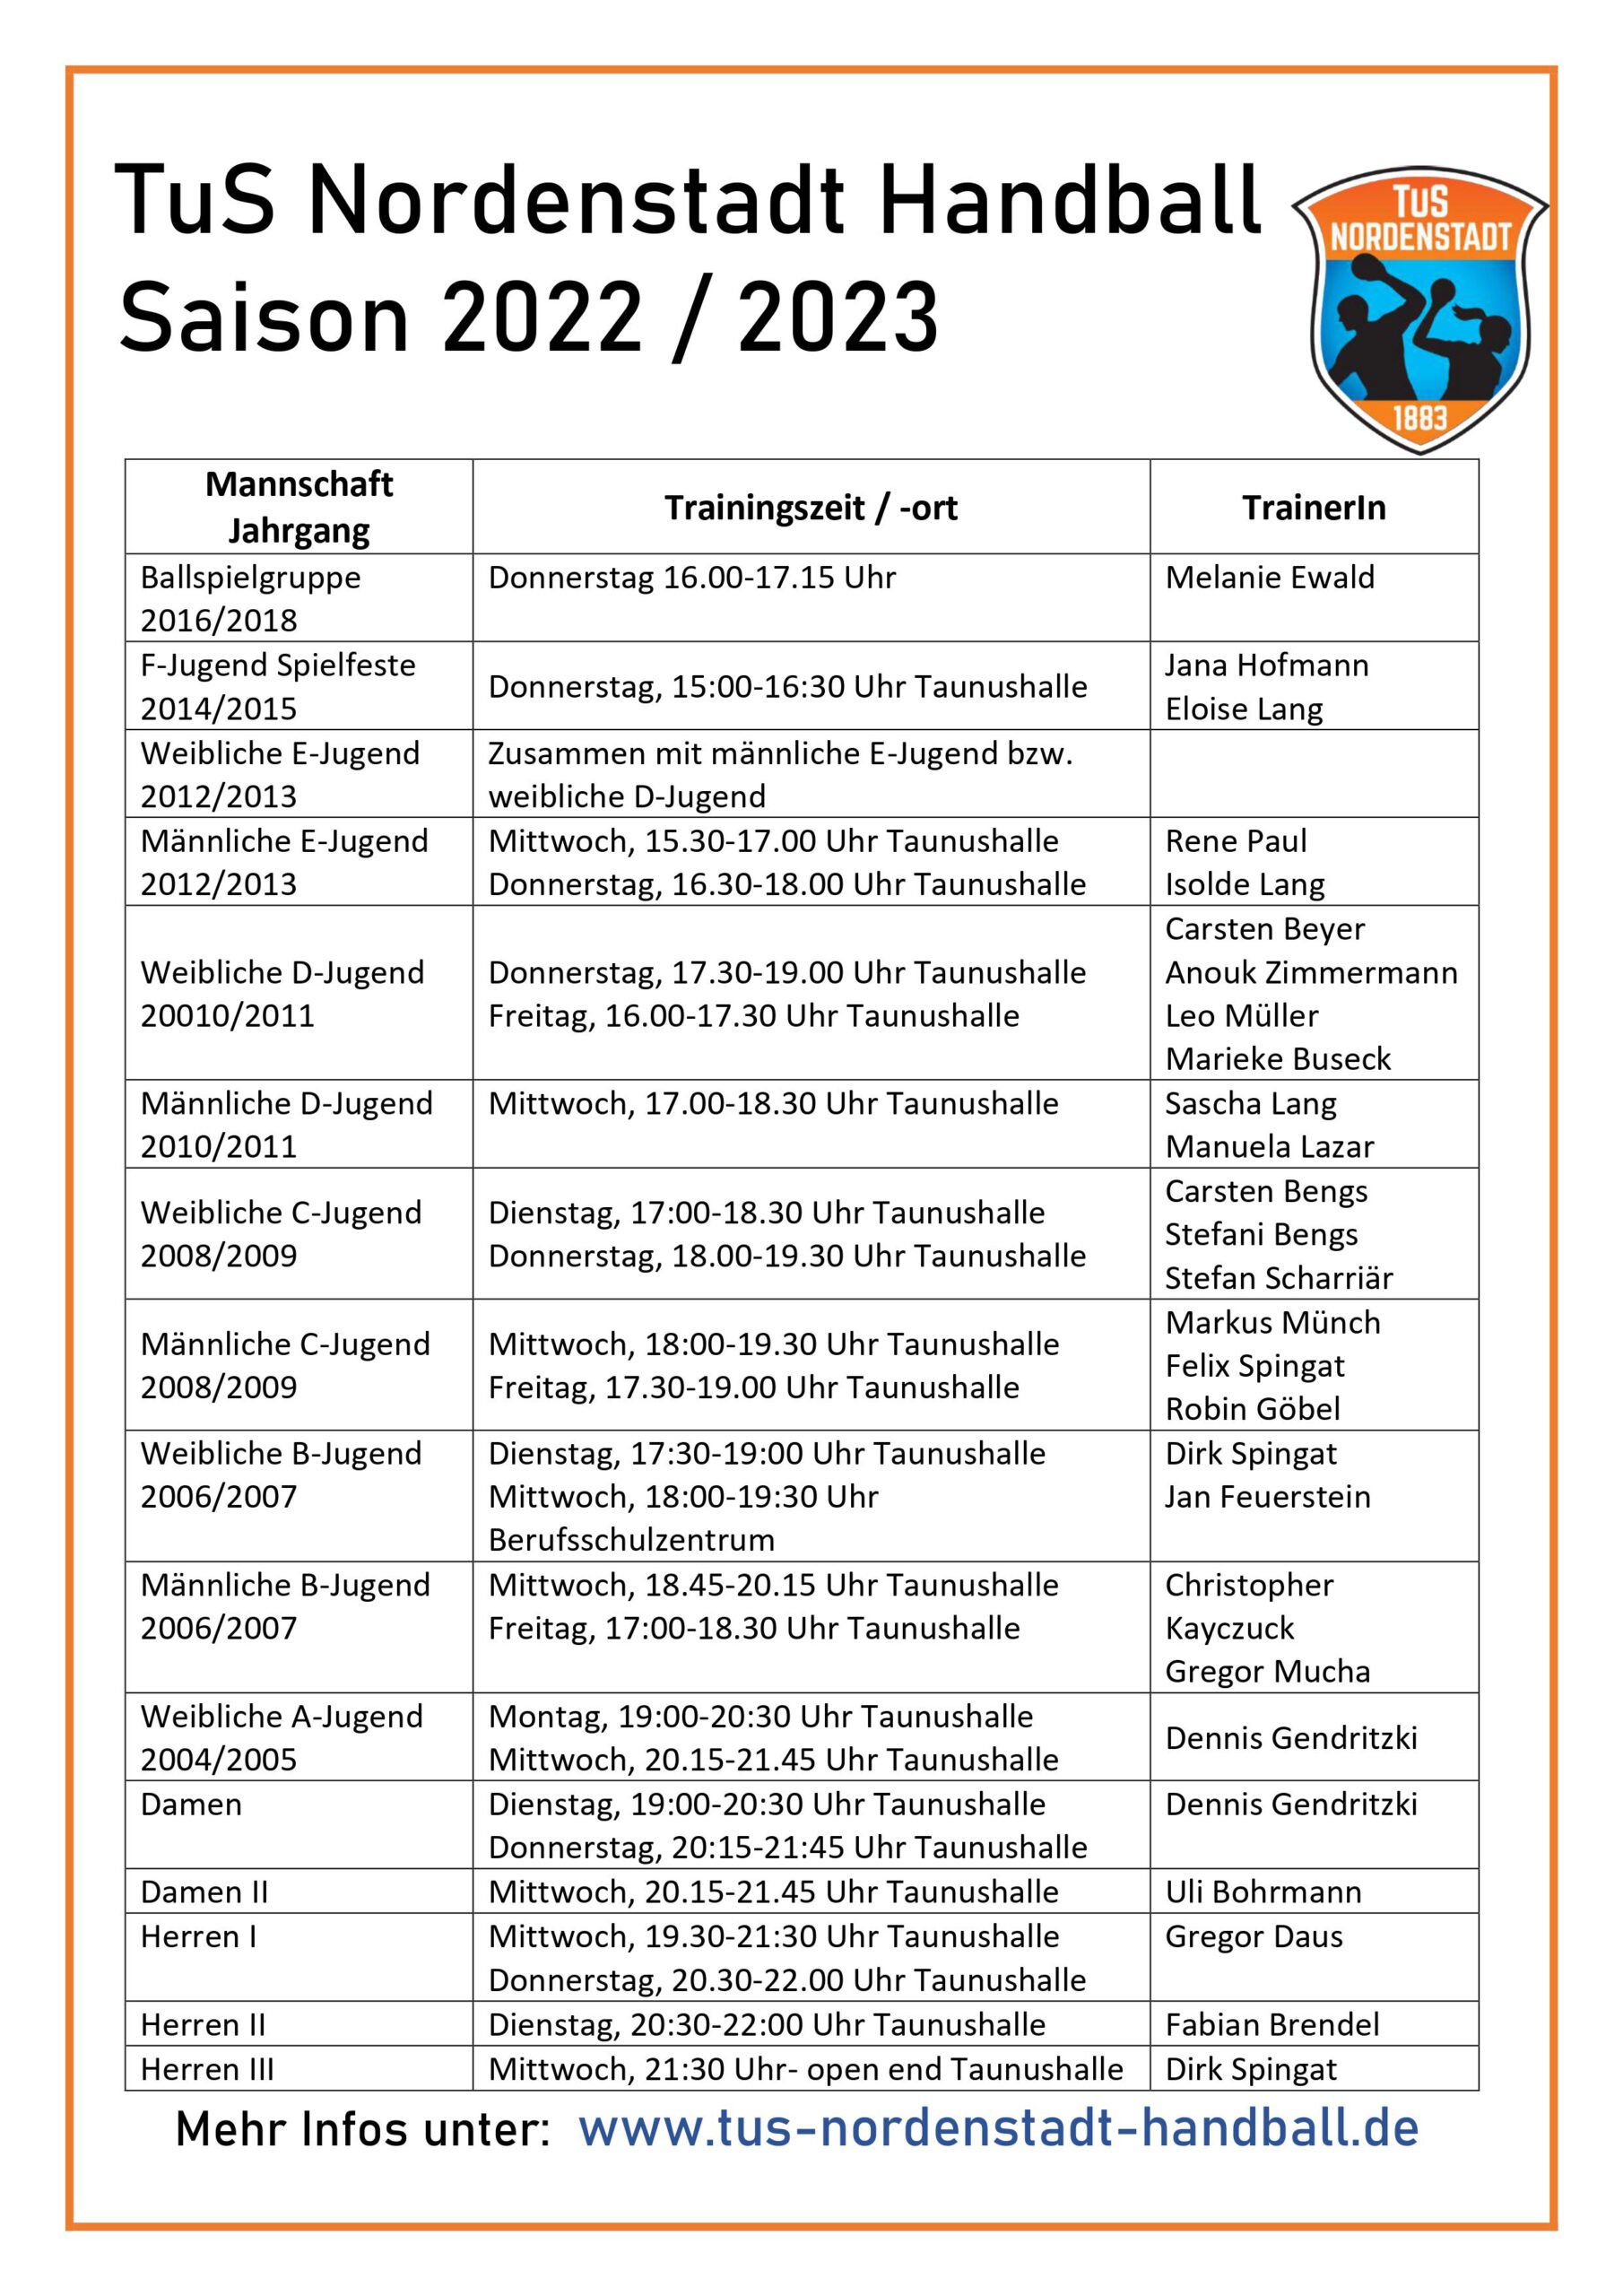 https://tus-nordenstadt-handball.de/wp-content/uploads/2023/01/UebersichtHandball-Trainingszeiten-22_23-1-scaled.jpg